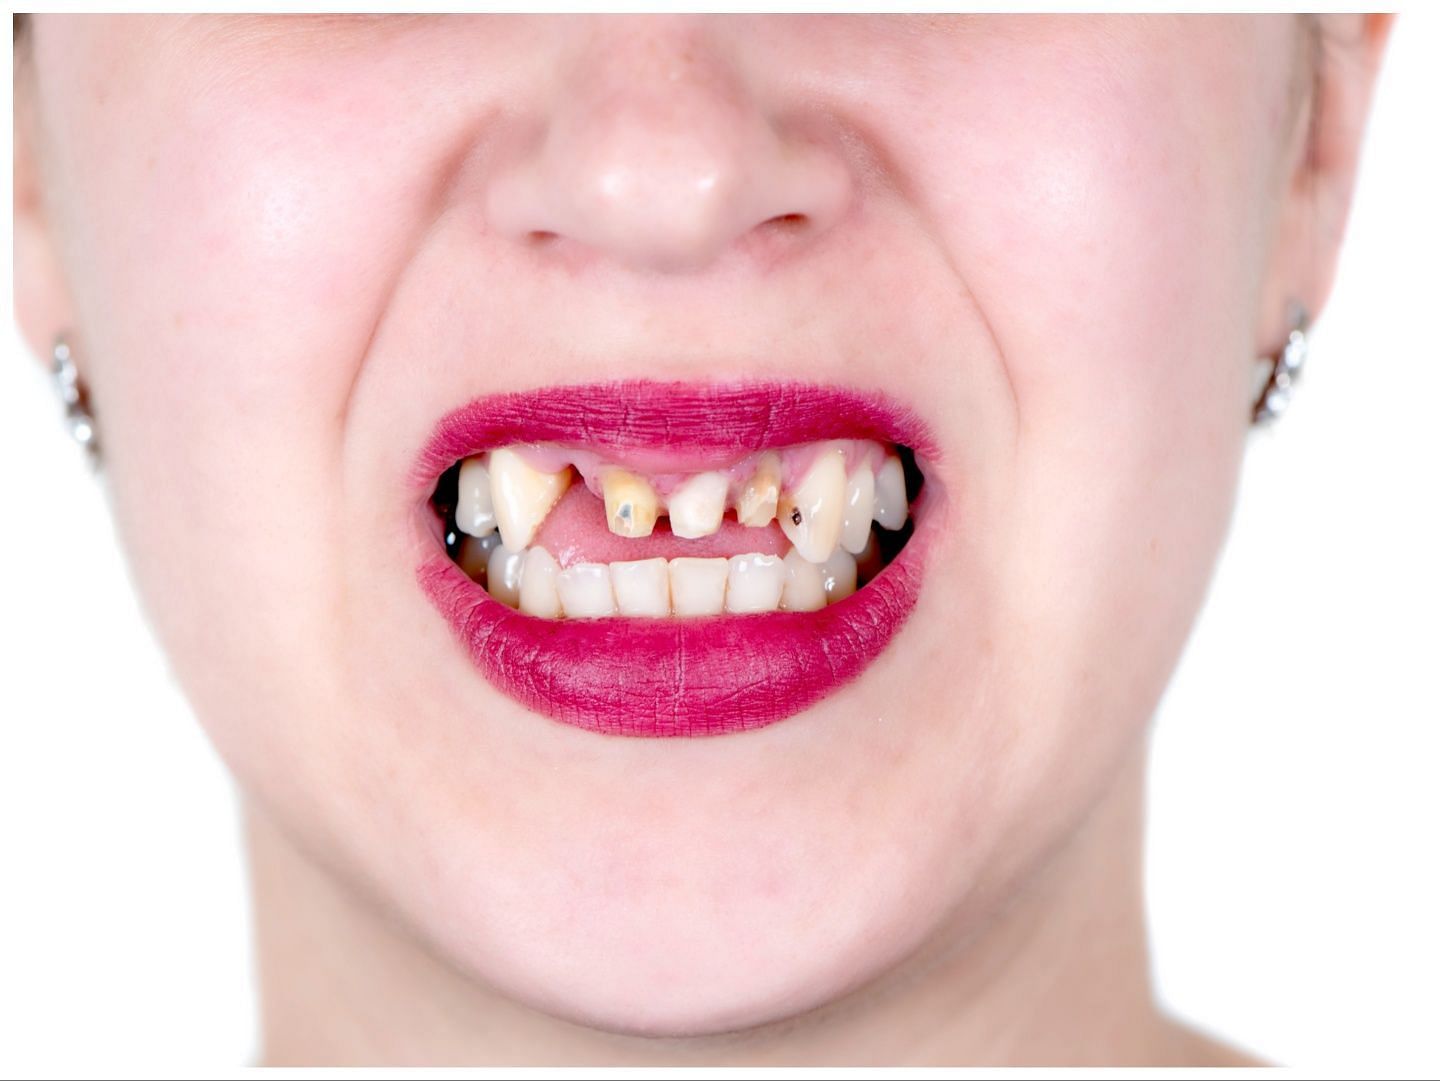 Drinking soda can damage your teeth (Image via Vecteezy)